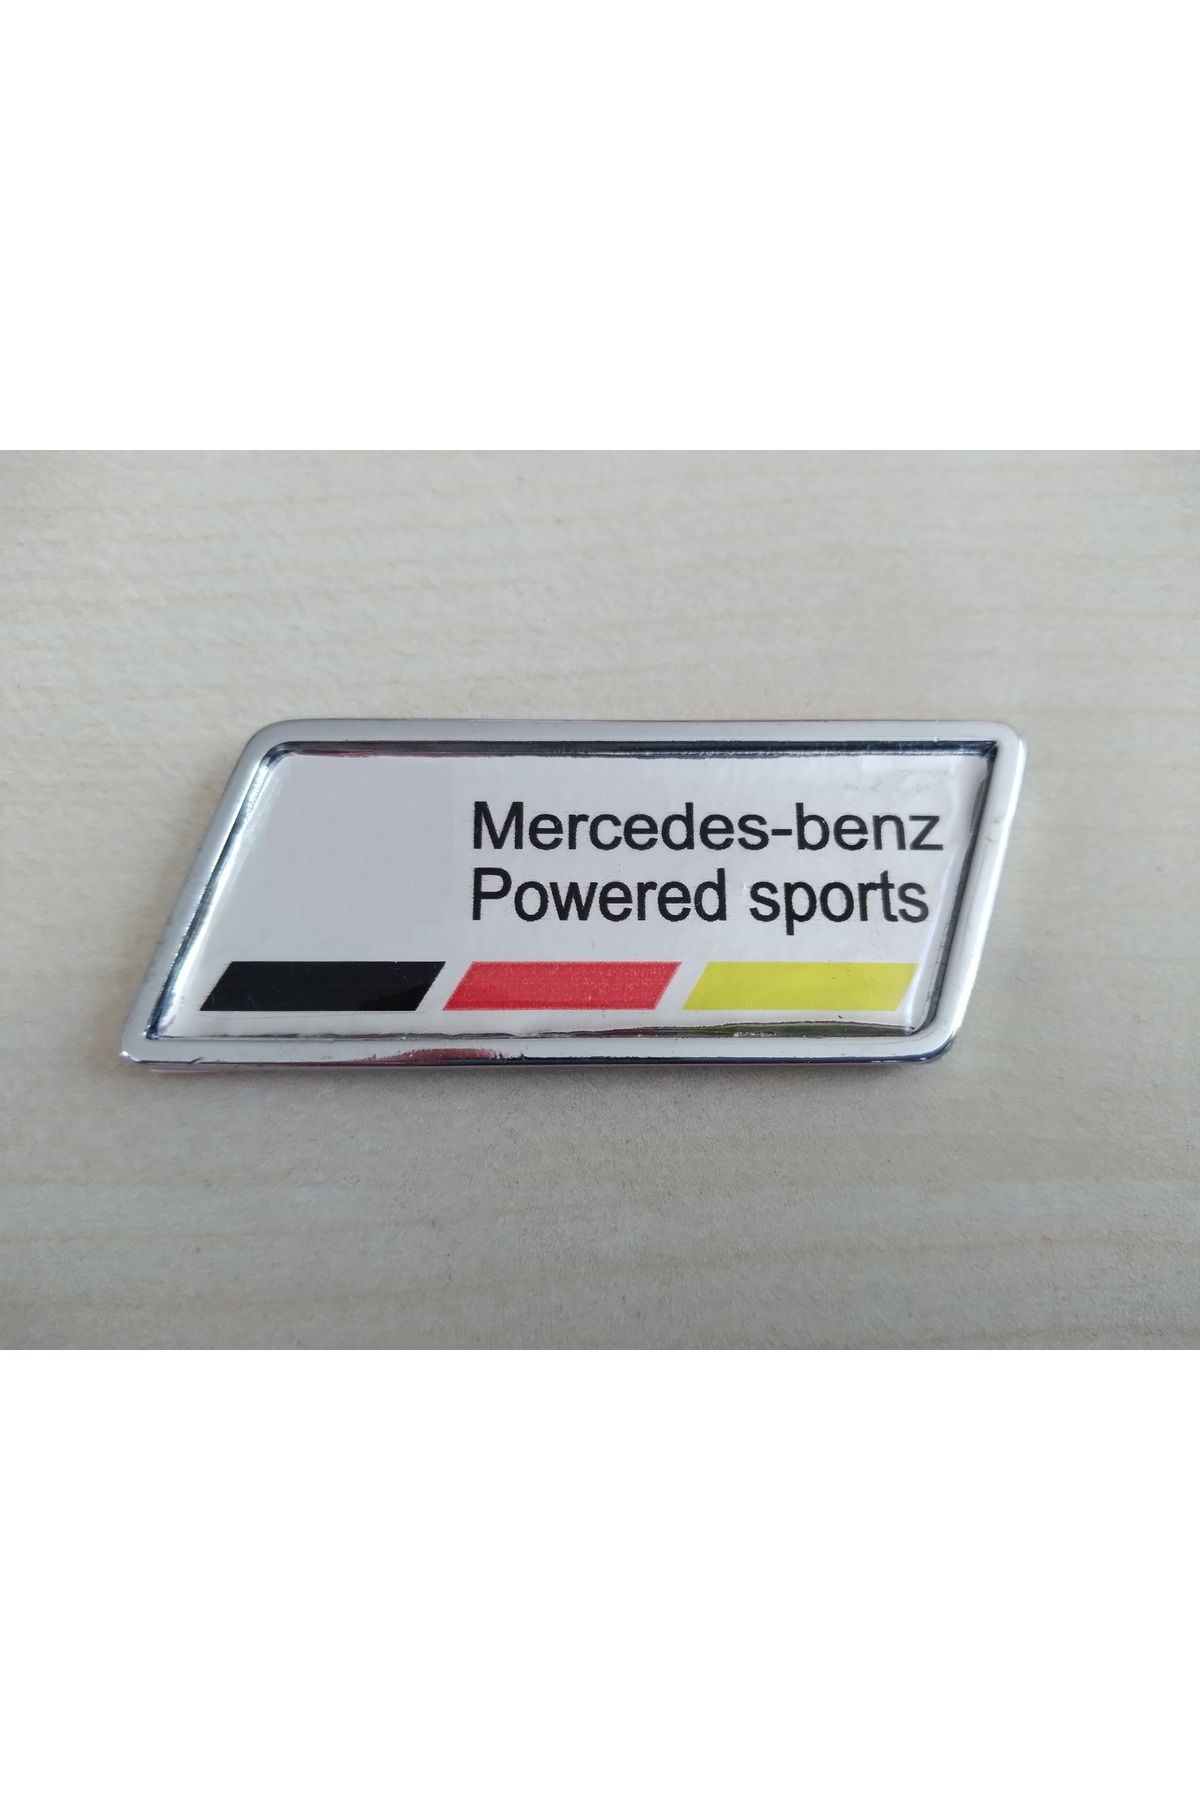 Sportline Sport Mercedes Yazısı - Mercedes Çamurluk Logosu - Mercedes Bagaj Logosu Mercedes Arması Etiketi